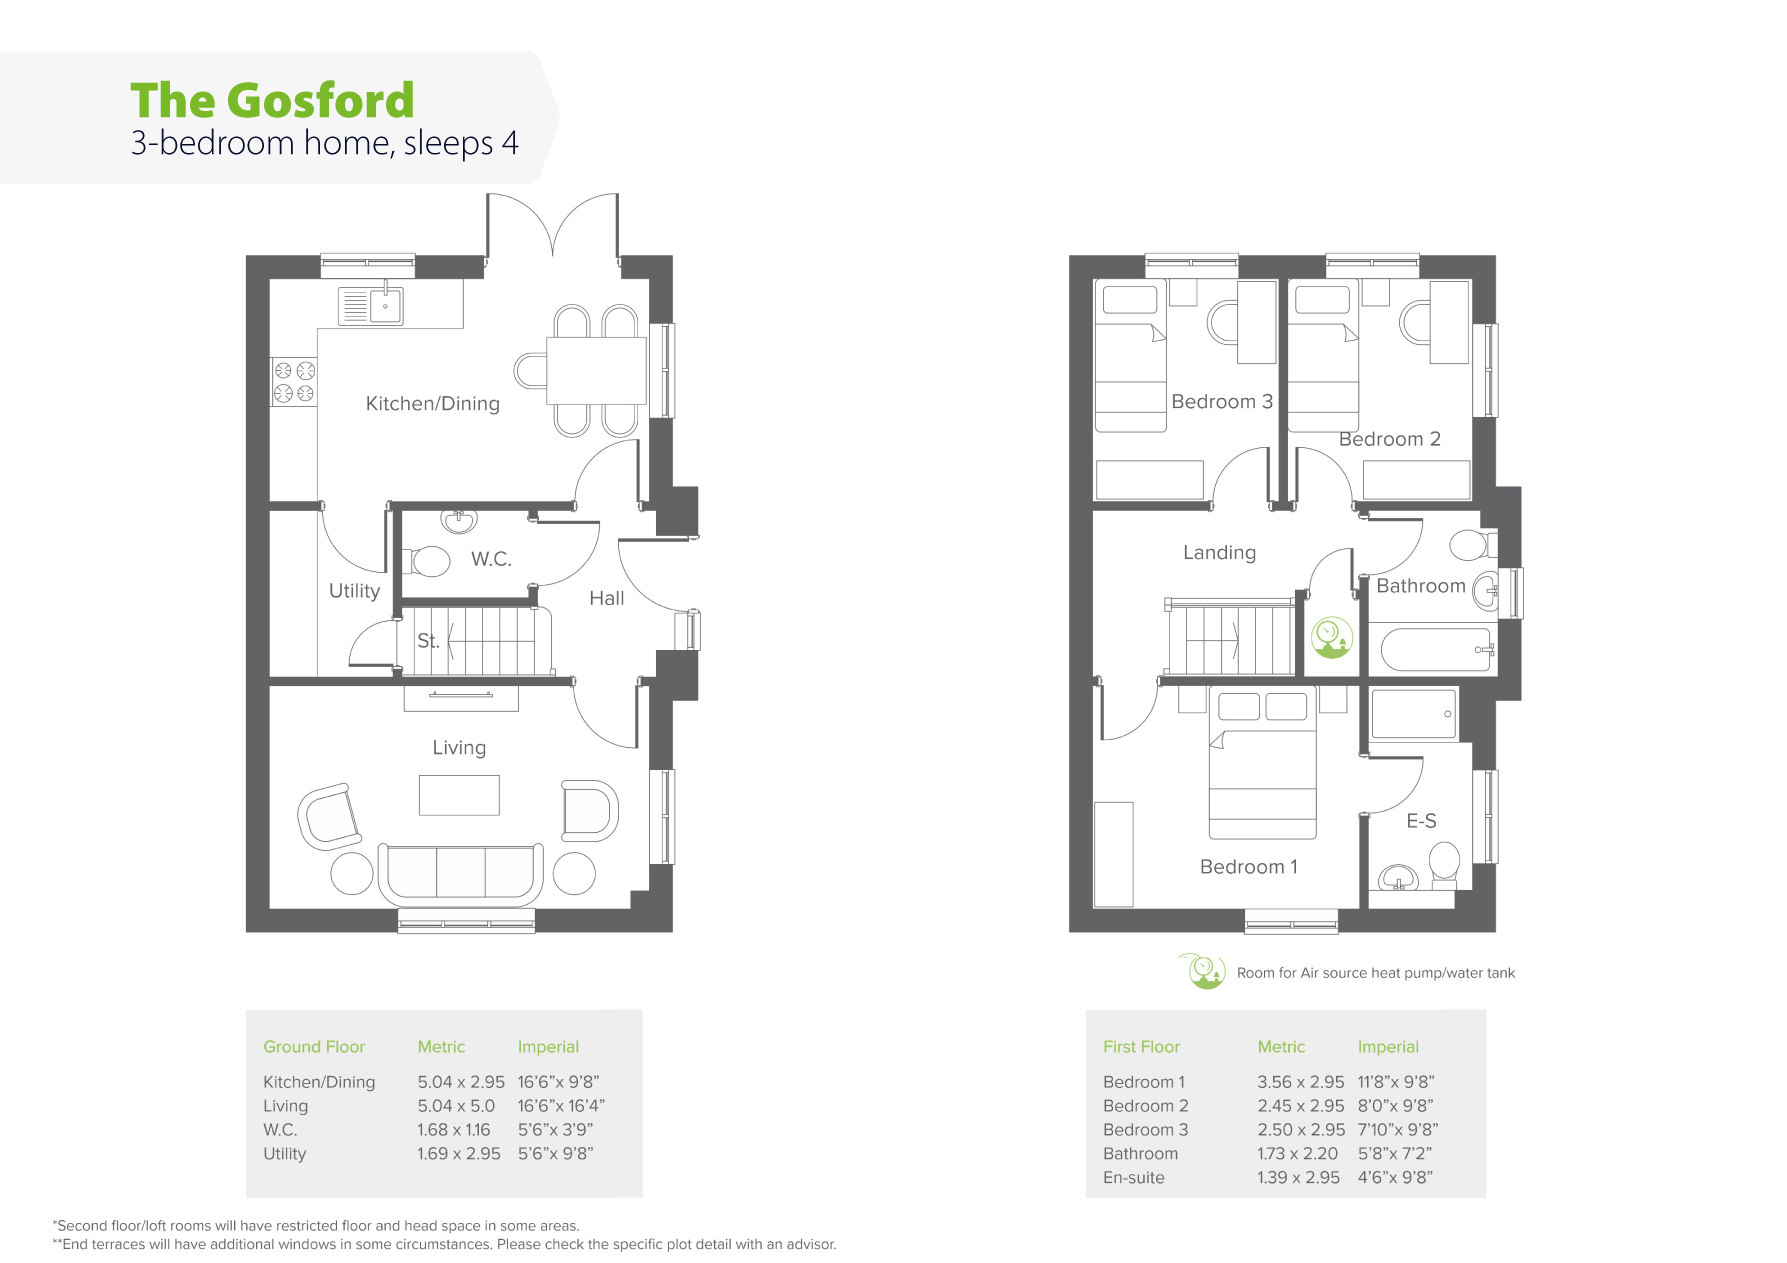 The Gosford floor plan